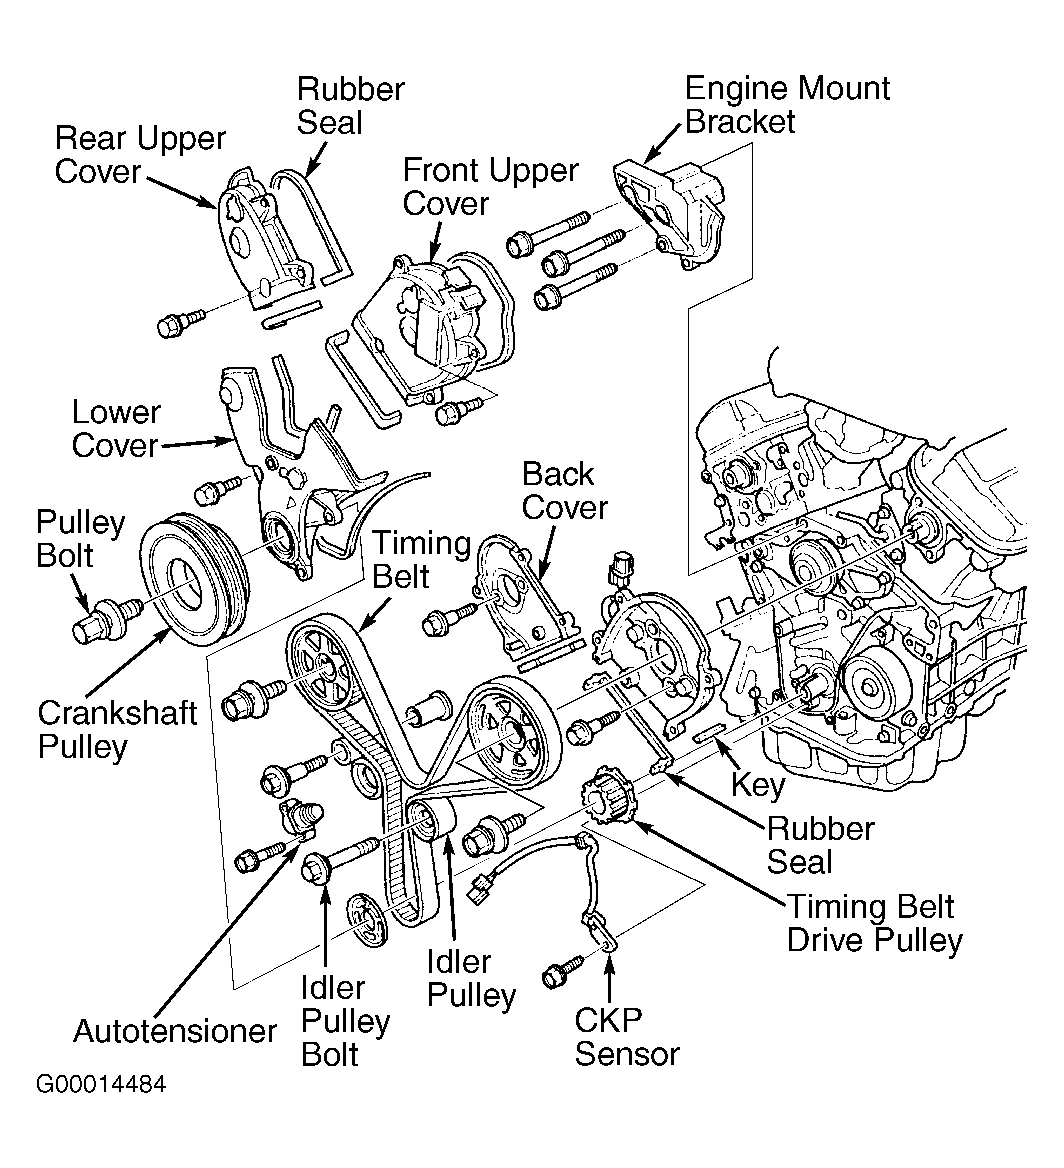  2003 Acura Serpentine Belt Diagrams